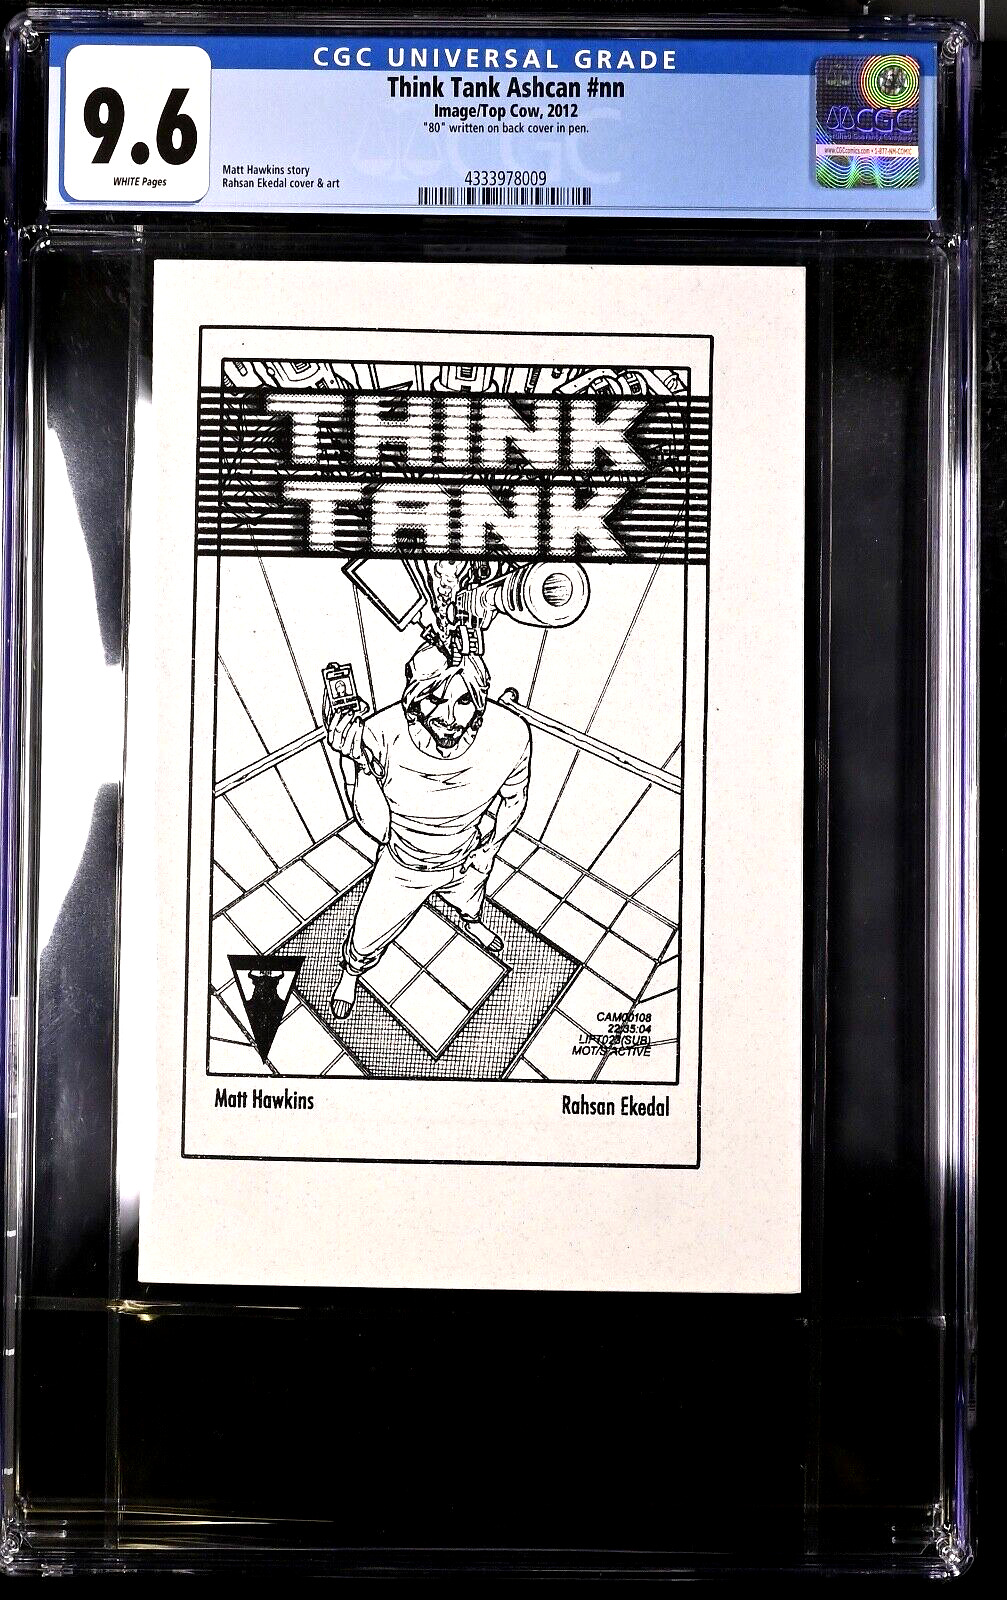 Think Tank 1 RARE Ashcan  CGC 9.6 Image Top Cow 80 of 150 2012 Hawkins & Ekedal